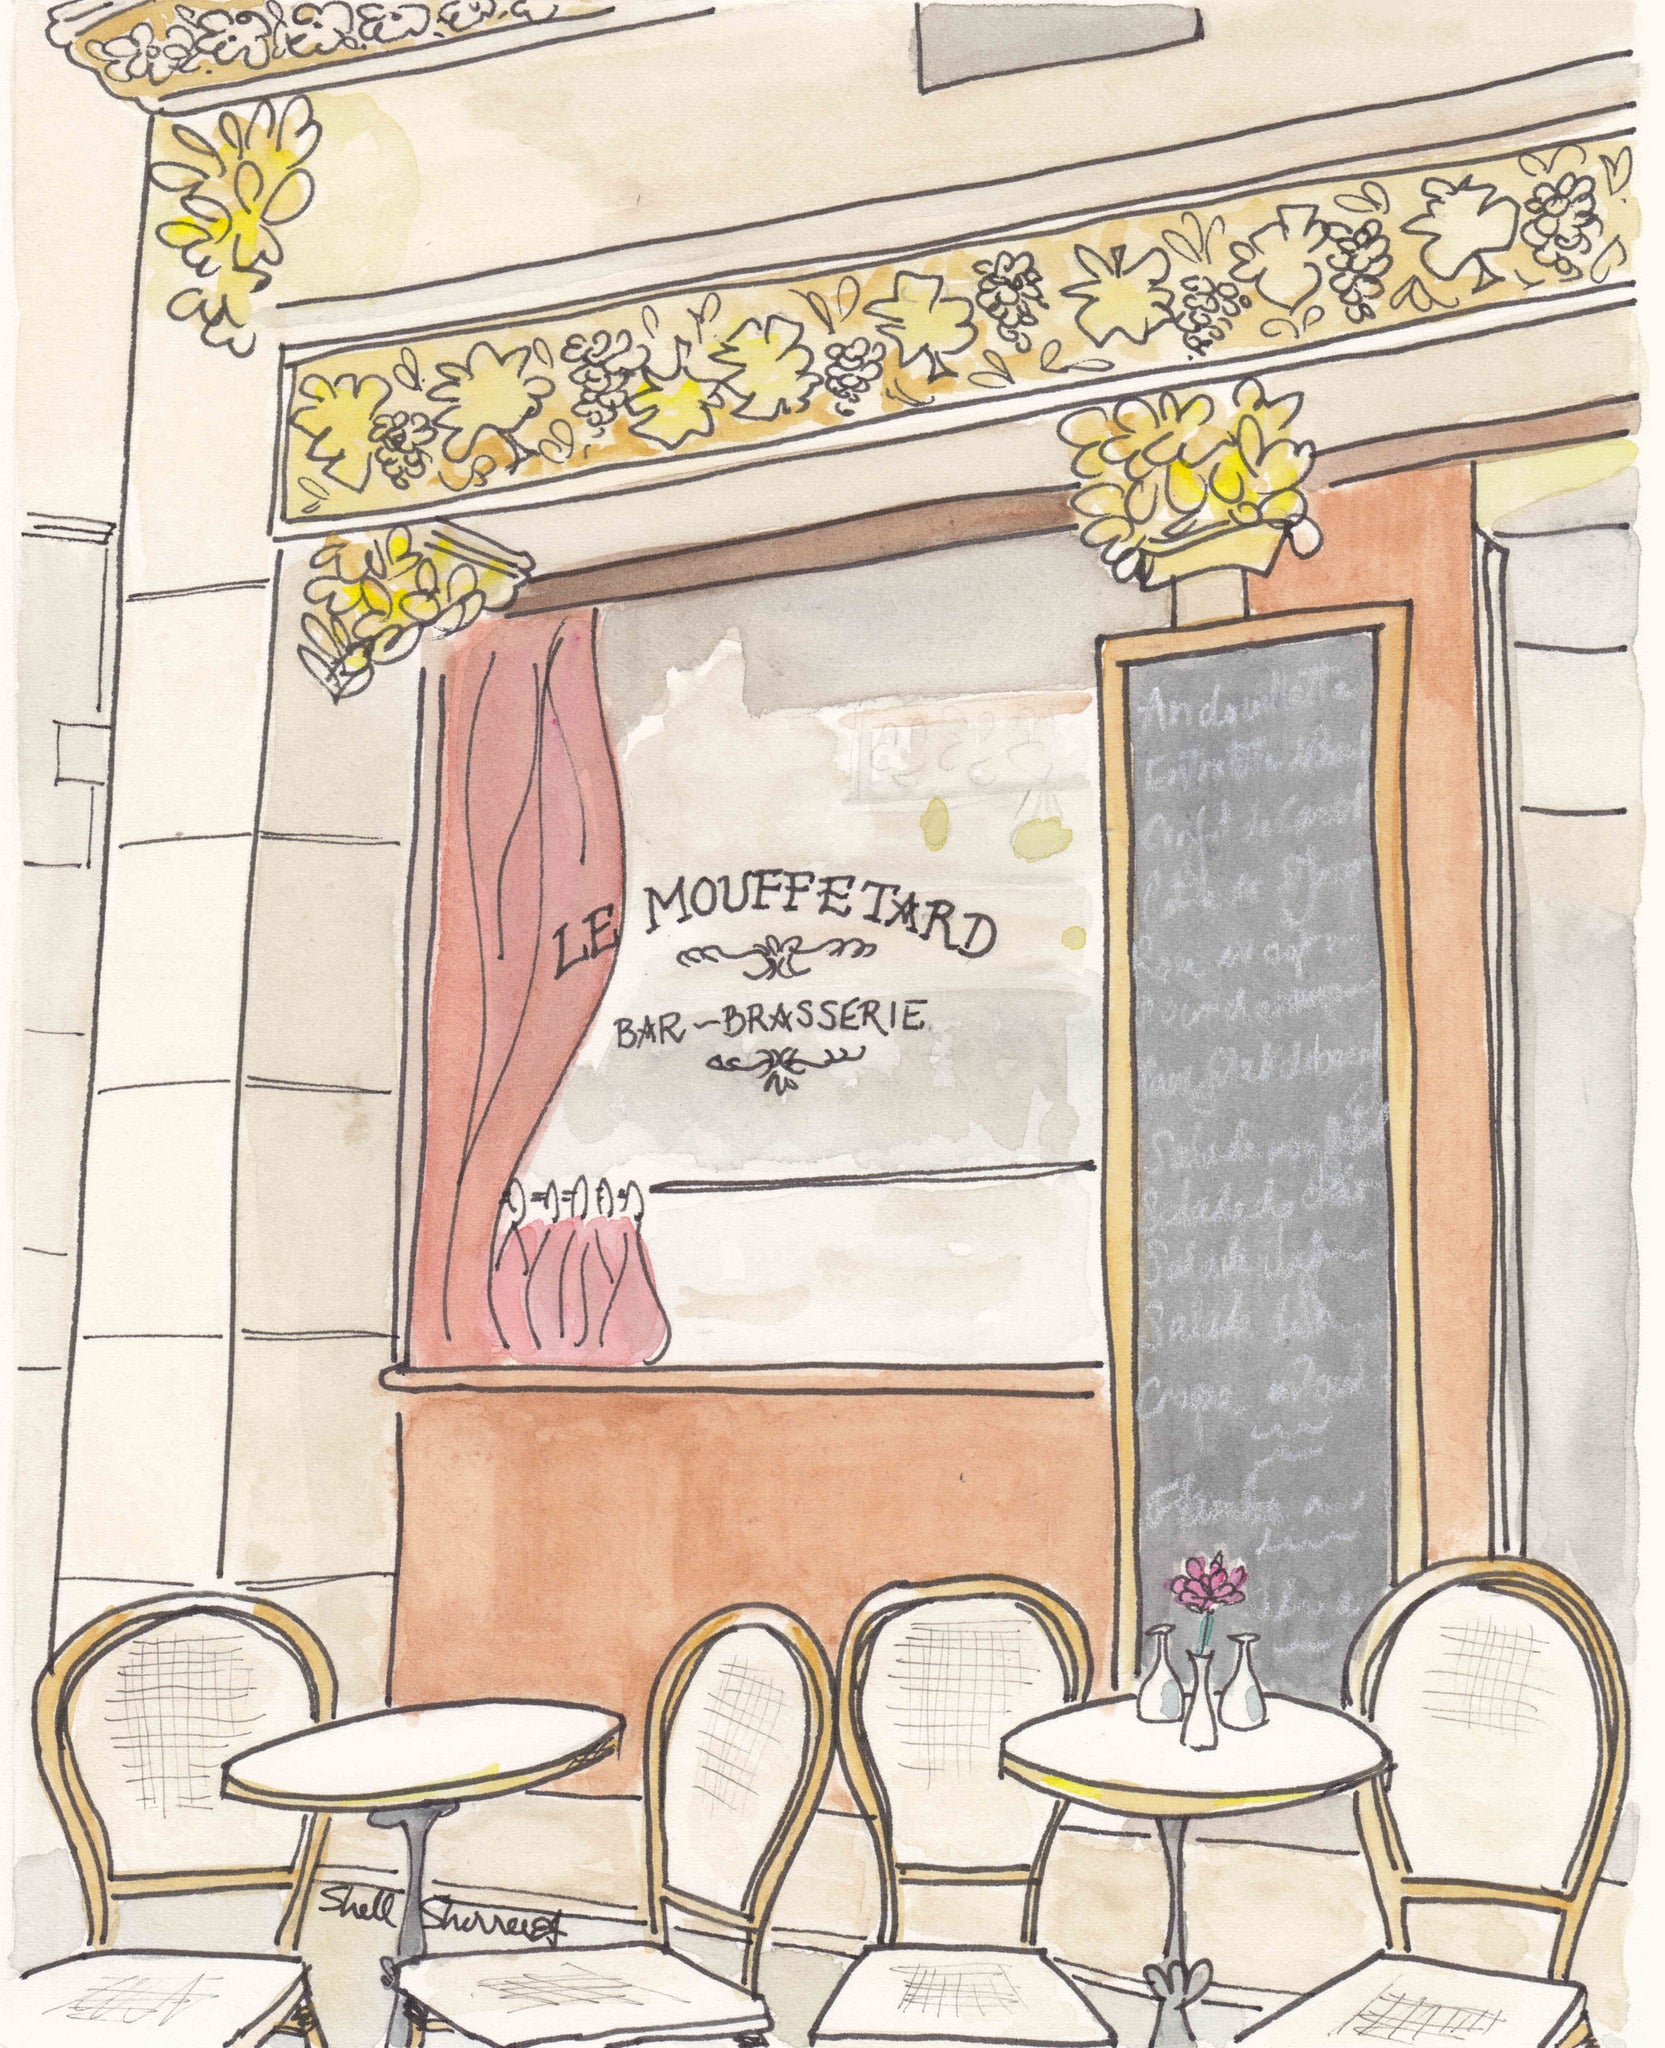 French cafe bar wall art Le Mouffetard by shell sherree